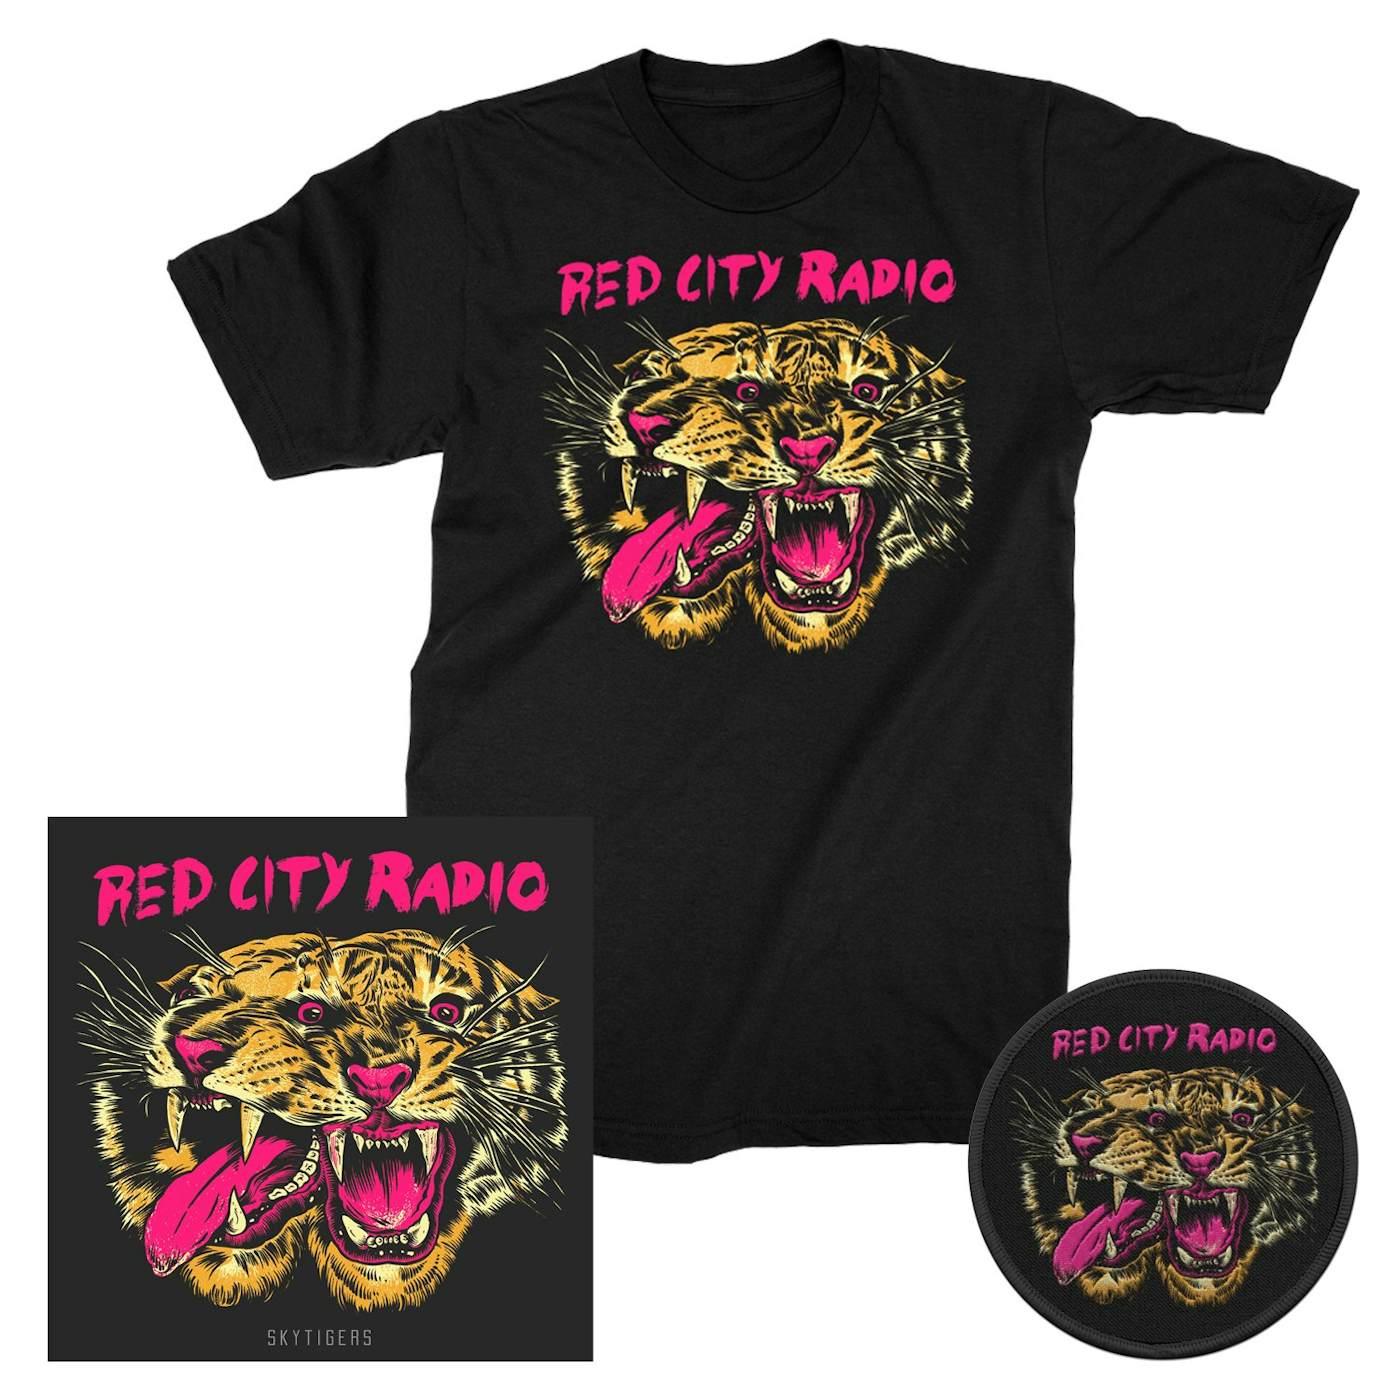 Red City Radio Sky Tigers EP CD + Tee + Patch